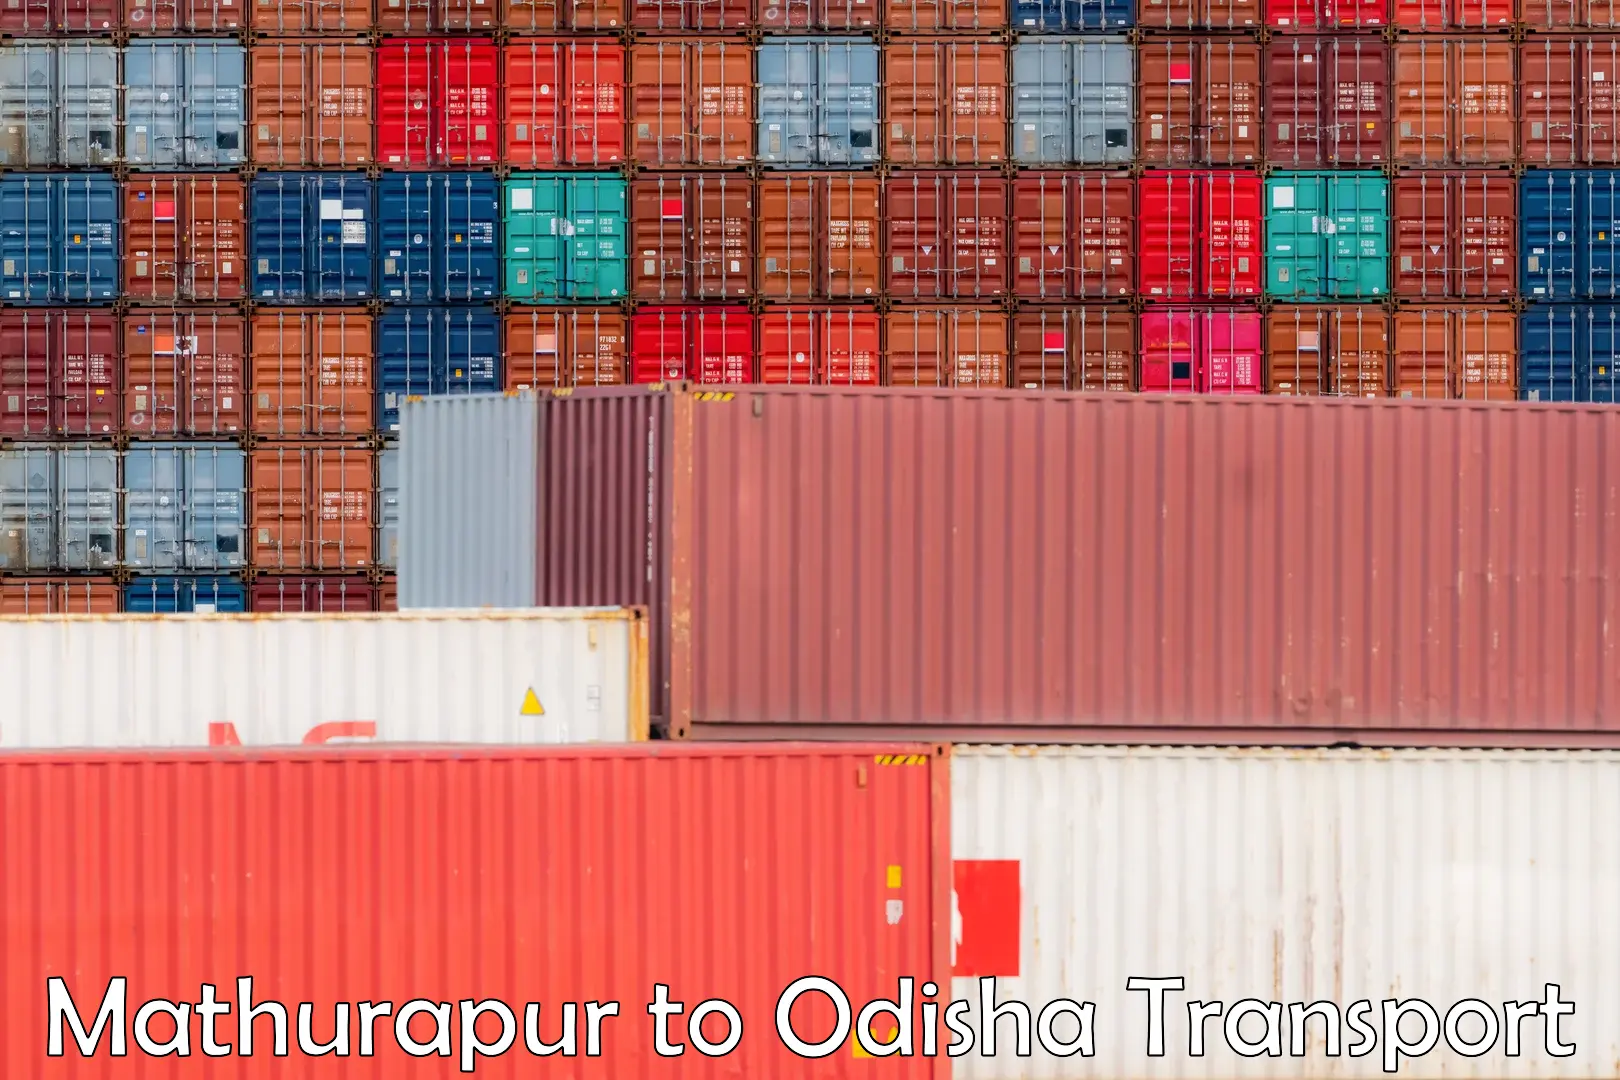 Shipping partner Mathurapur to Nirakarpur